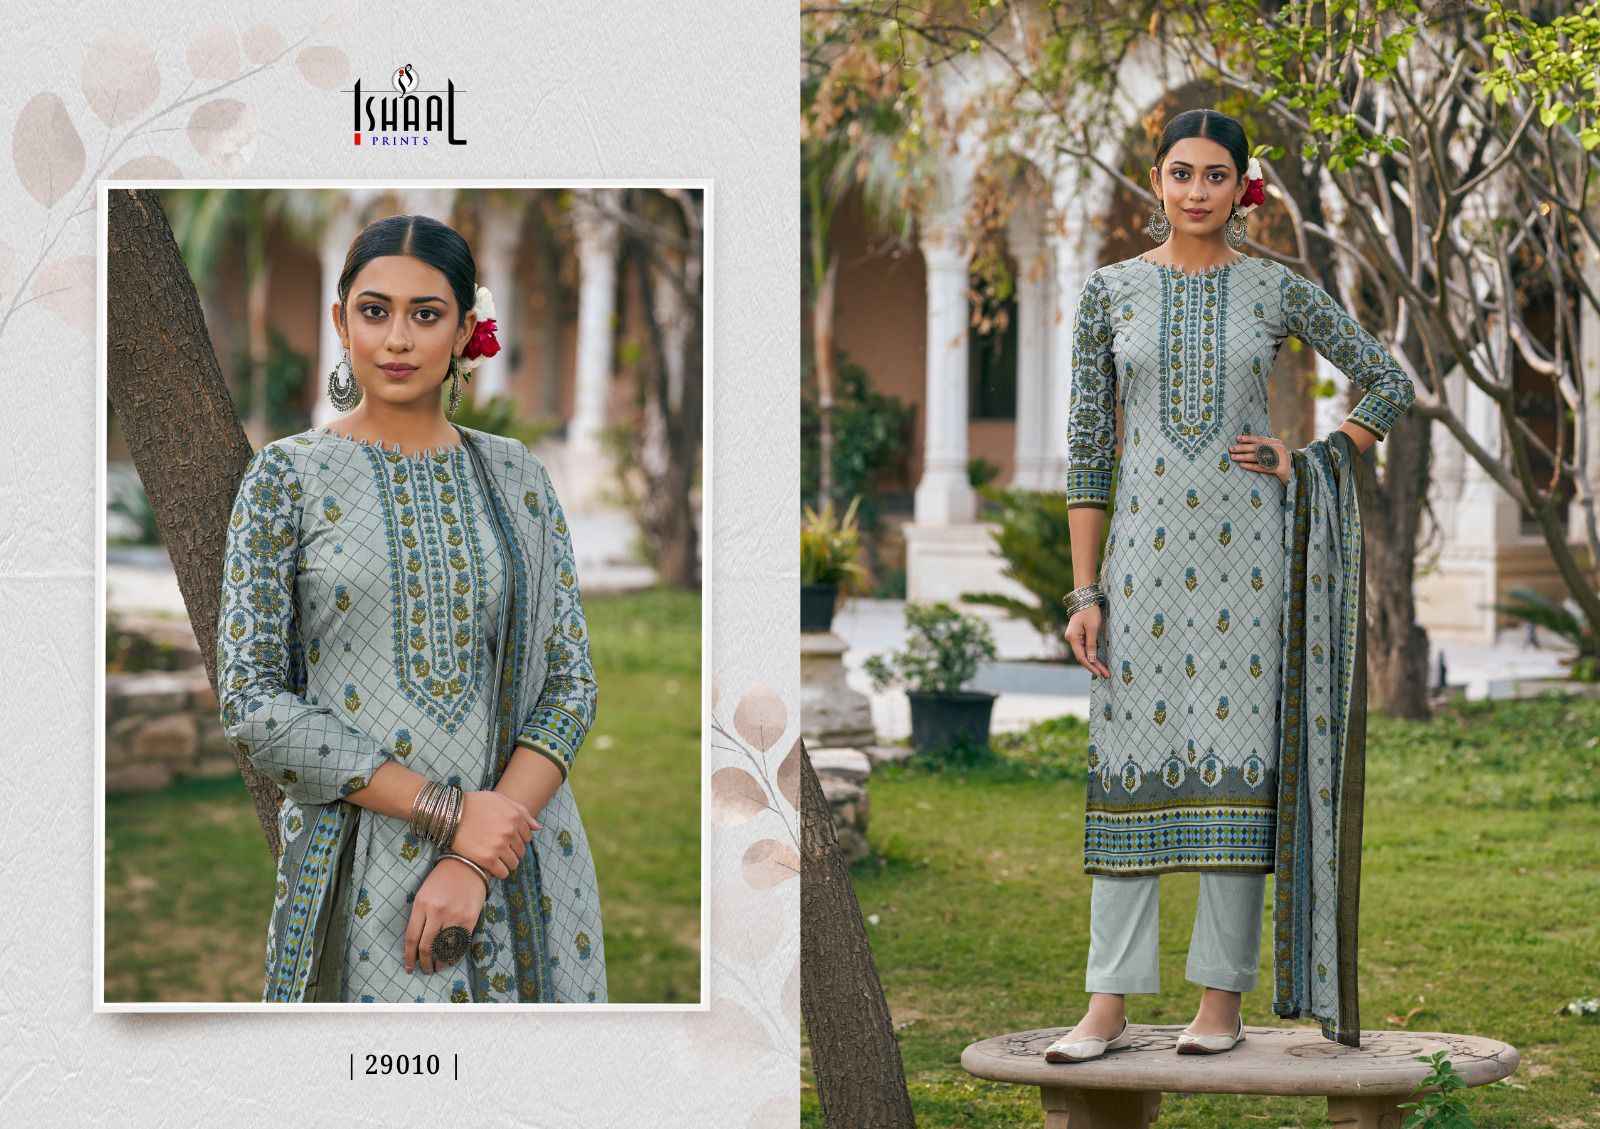 Ishaal Prints Gulmohar Vol-29 Pure Lawn Dress Material (10 Pc Catalouge)